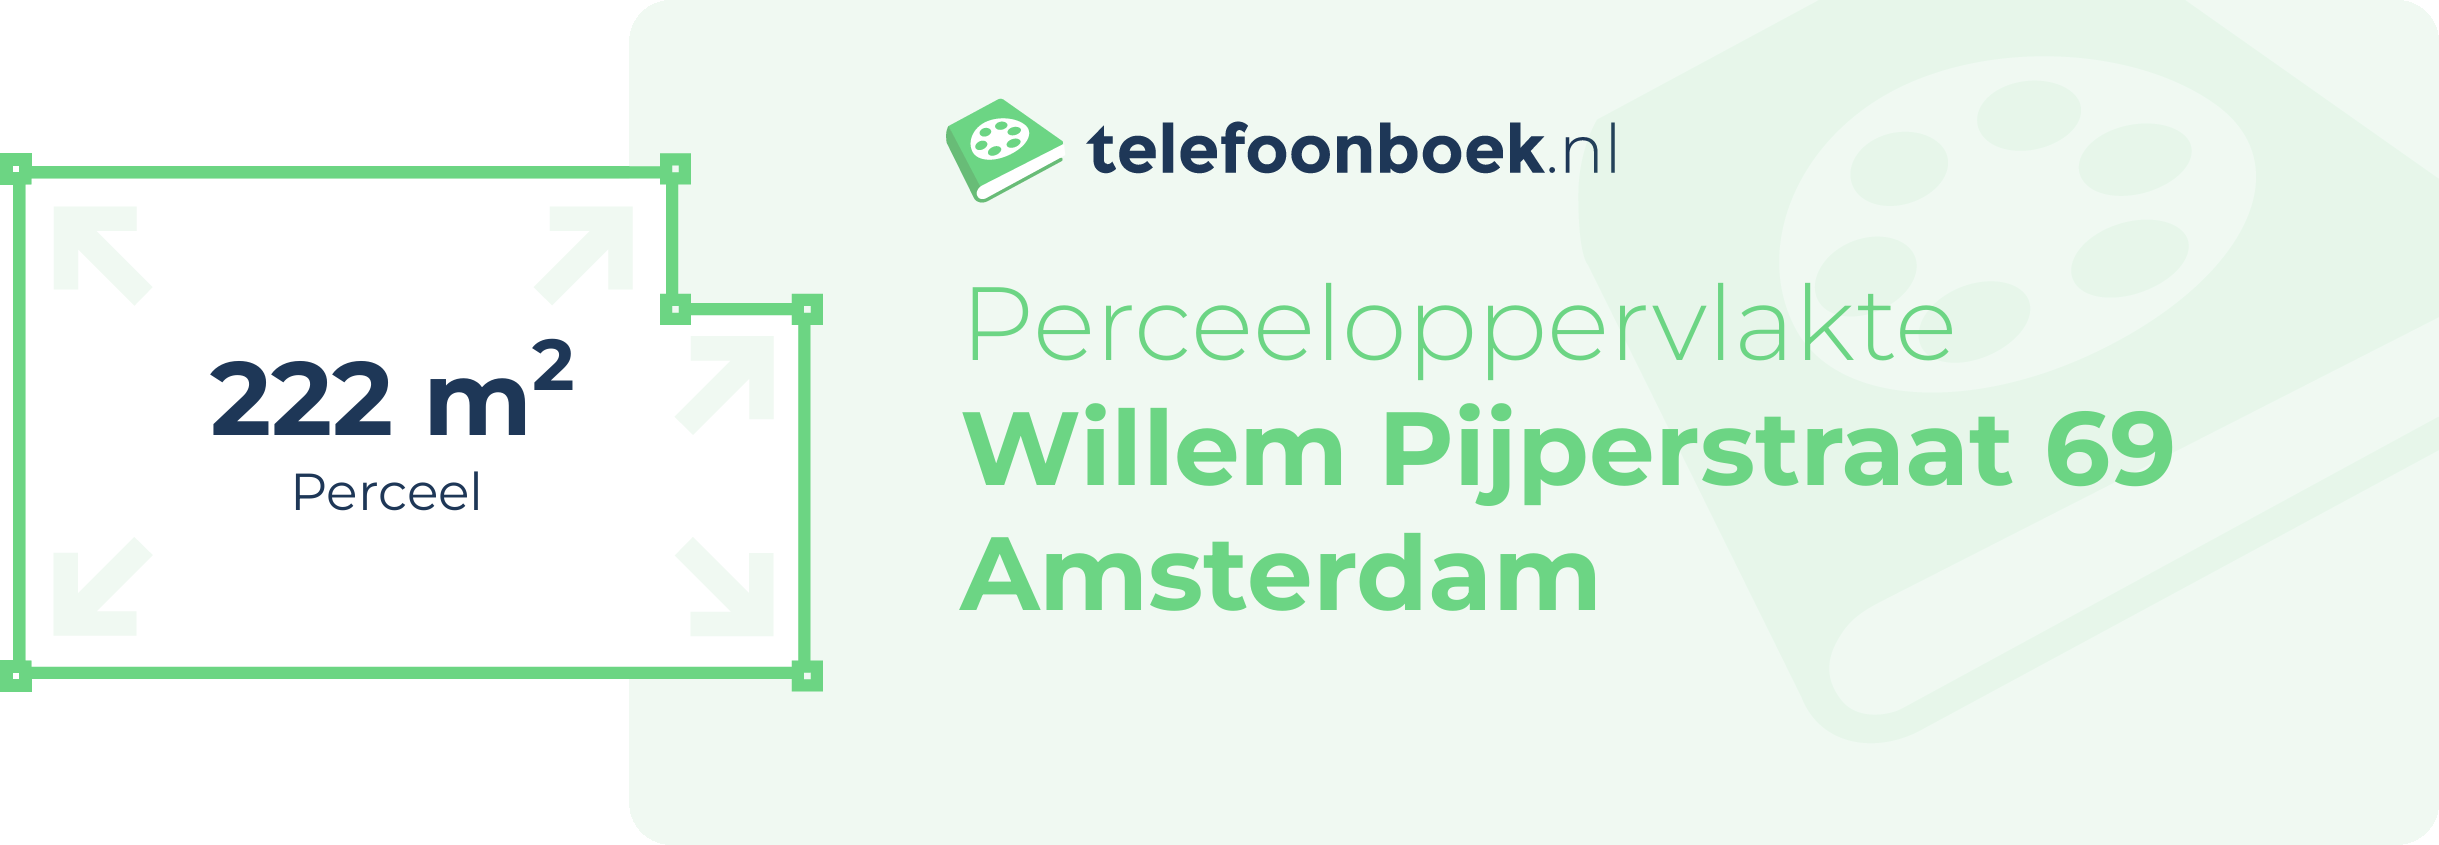 Perceeloppervlakte Willem Pijperstraat 69 Amsterdam